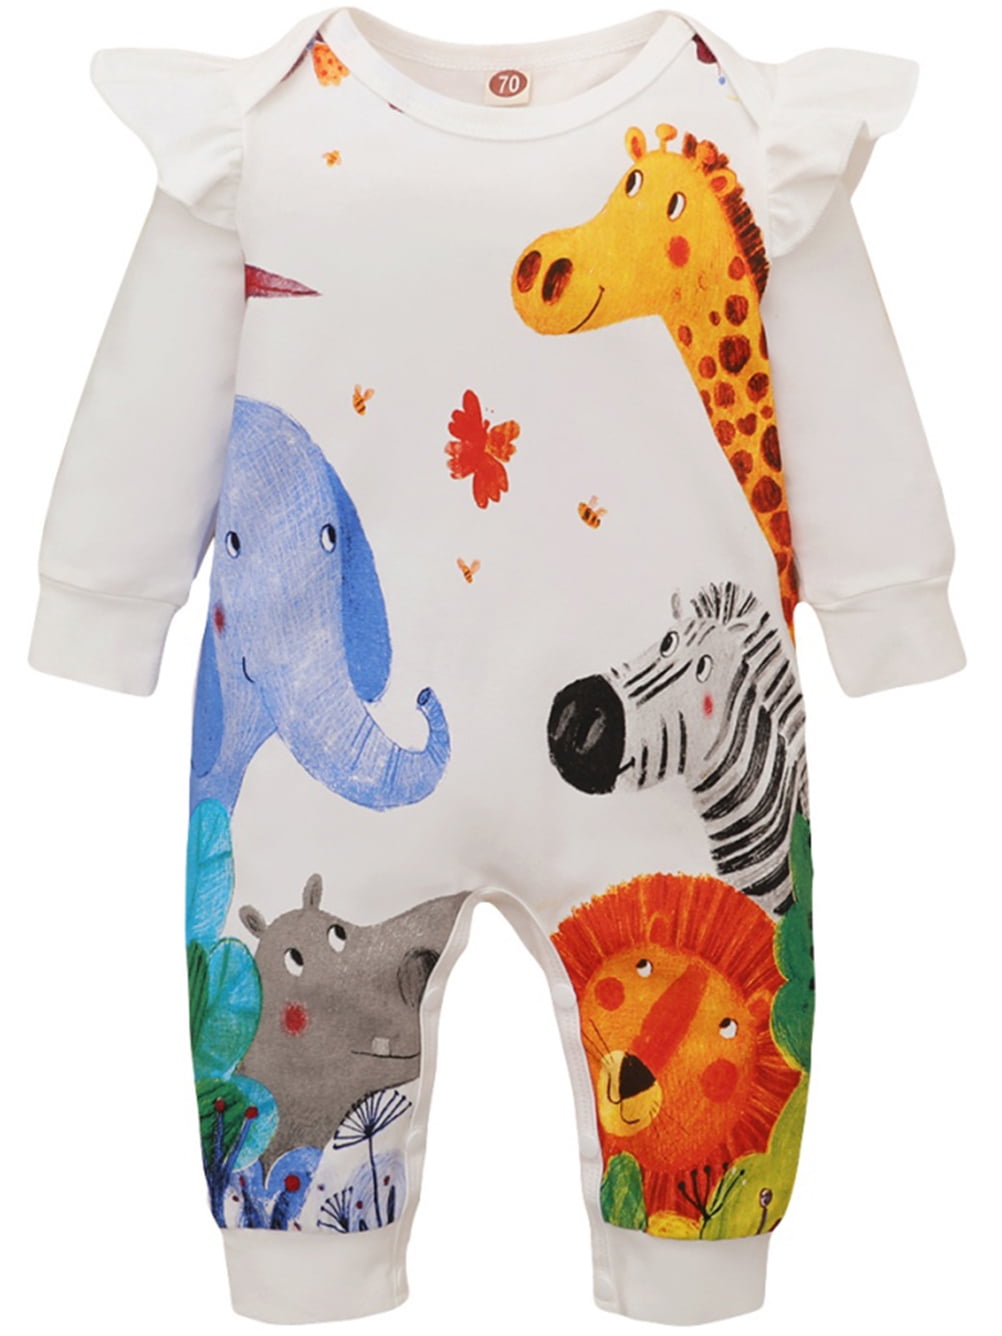 Newborn Infant Kids Baby Girl Animal Romper Jumpsuit Bodysuit Clothes Outfit Set 